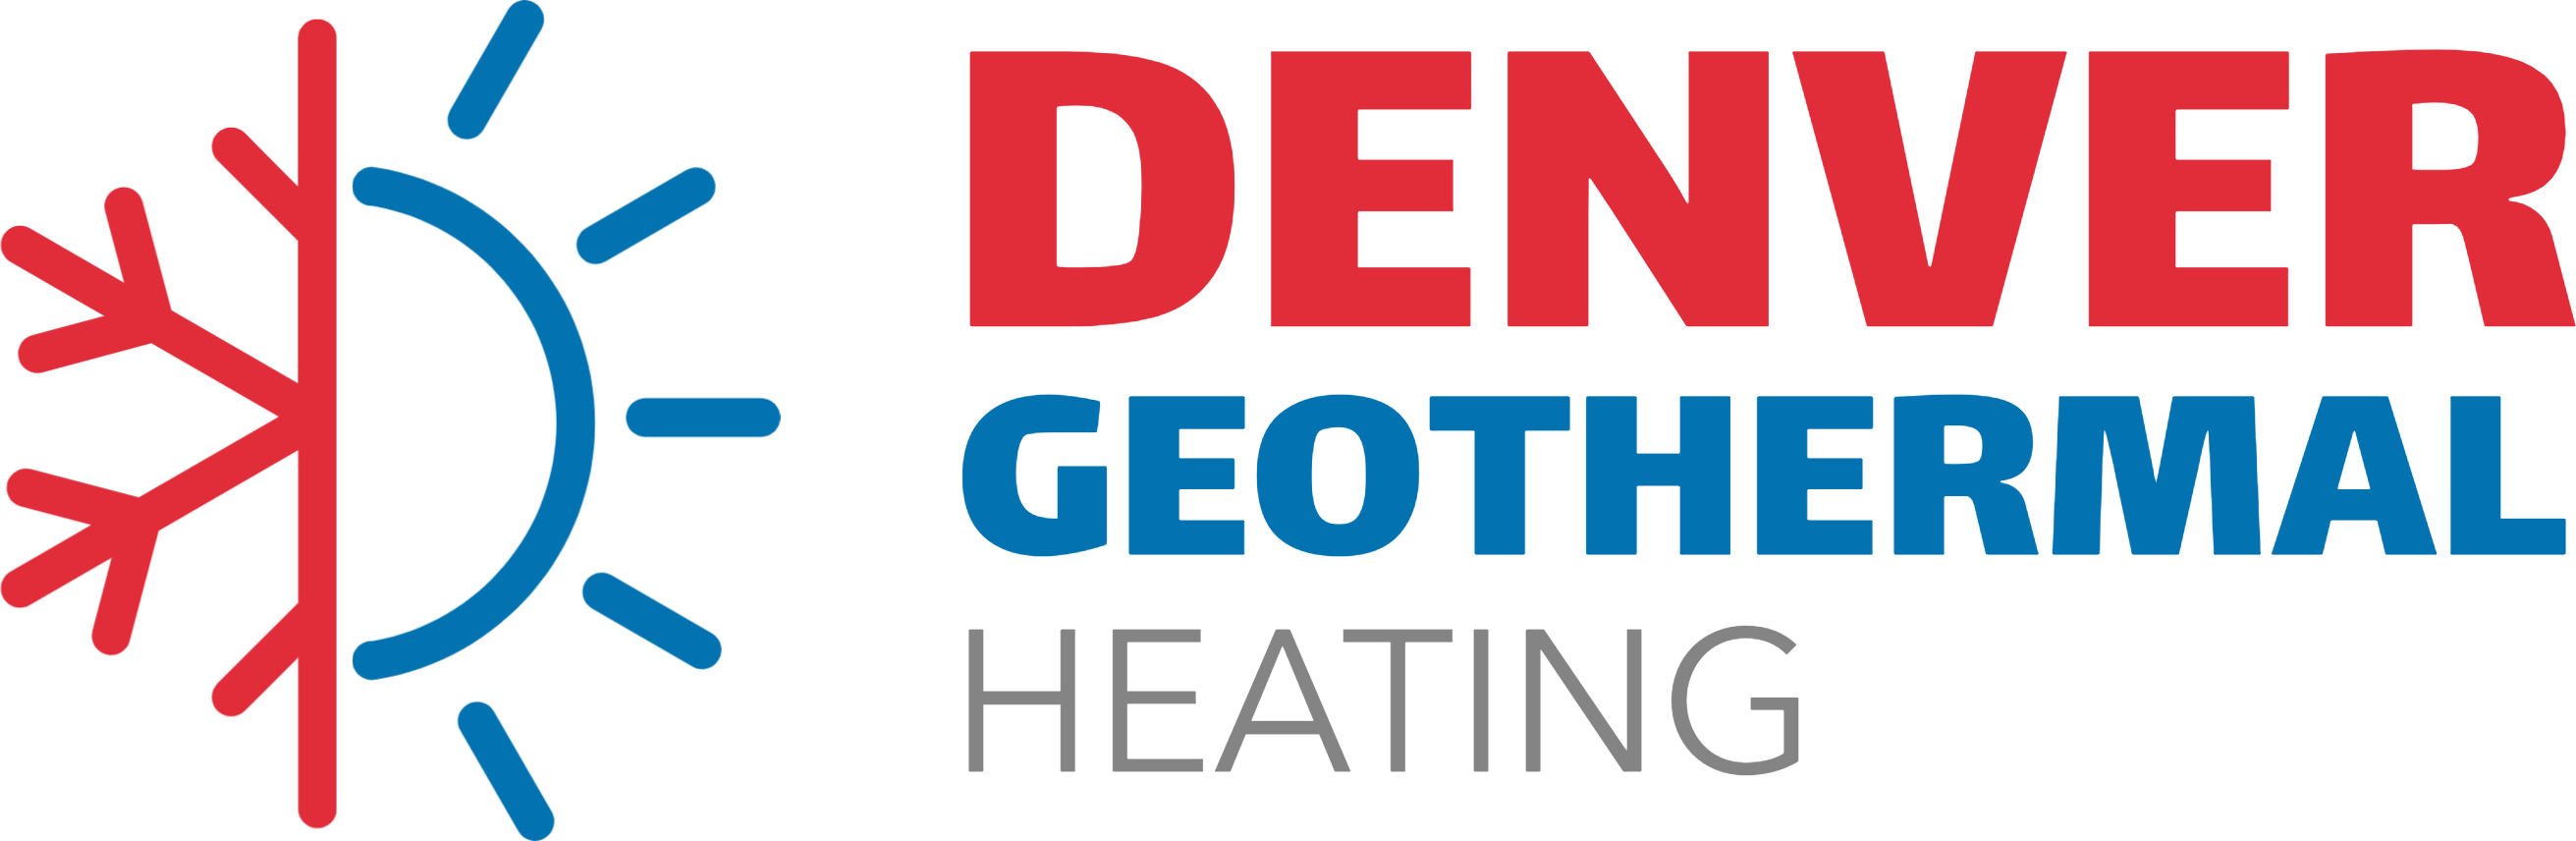 Denver Geothermal Heating Home